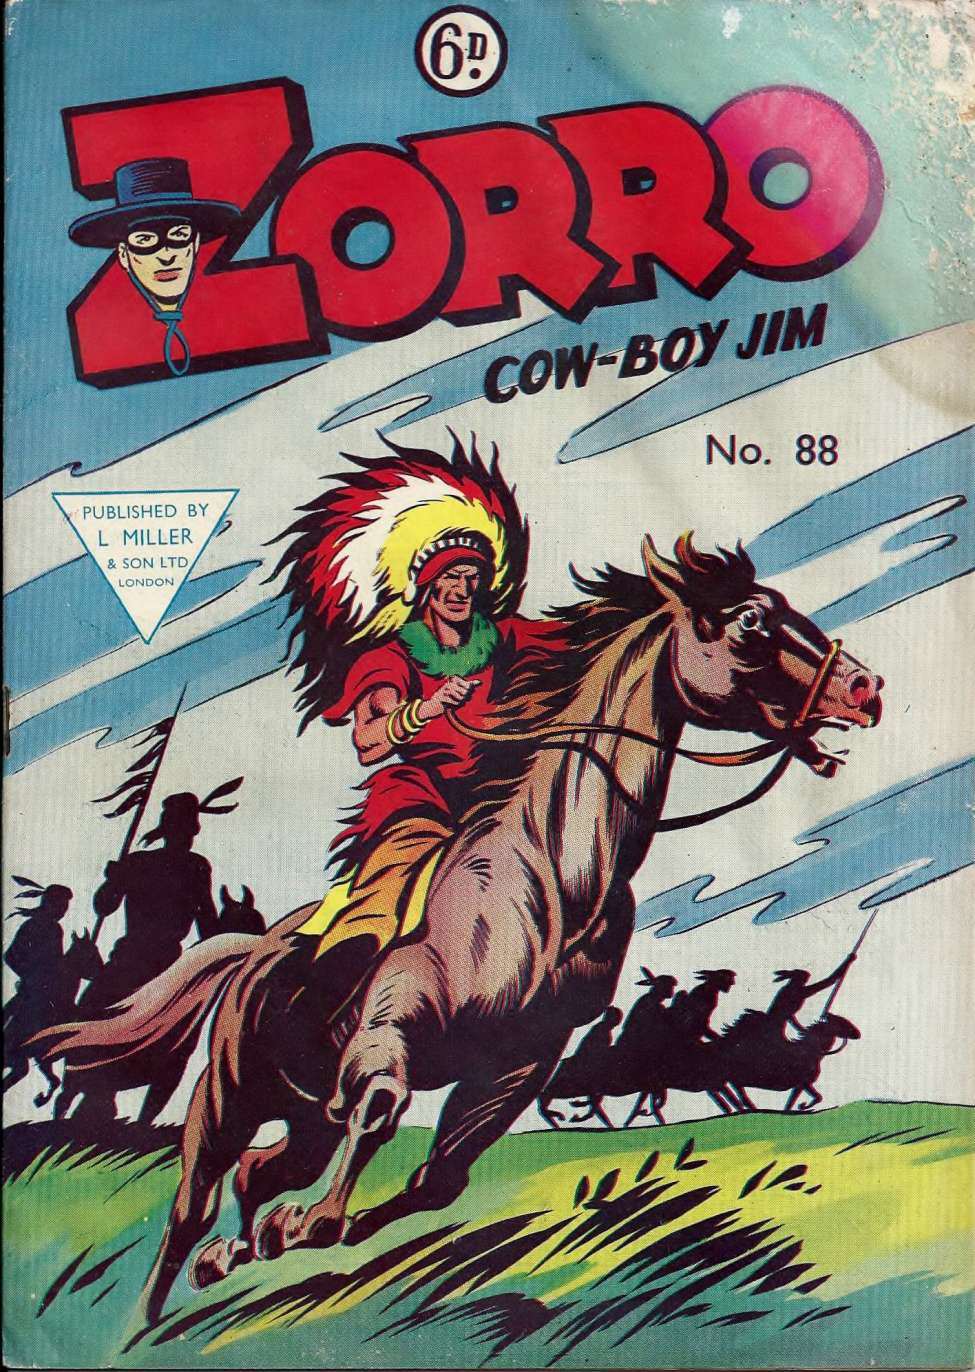 Book Cover For Zorro 88 - Cow-boy Jim